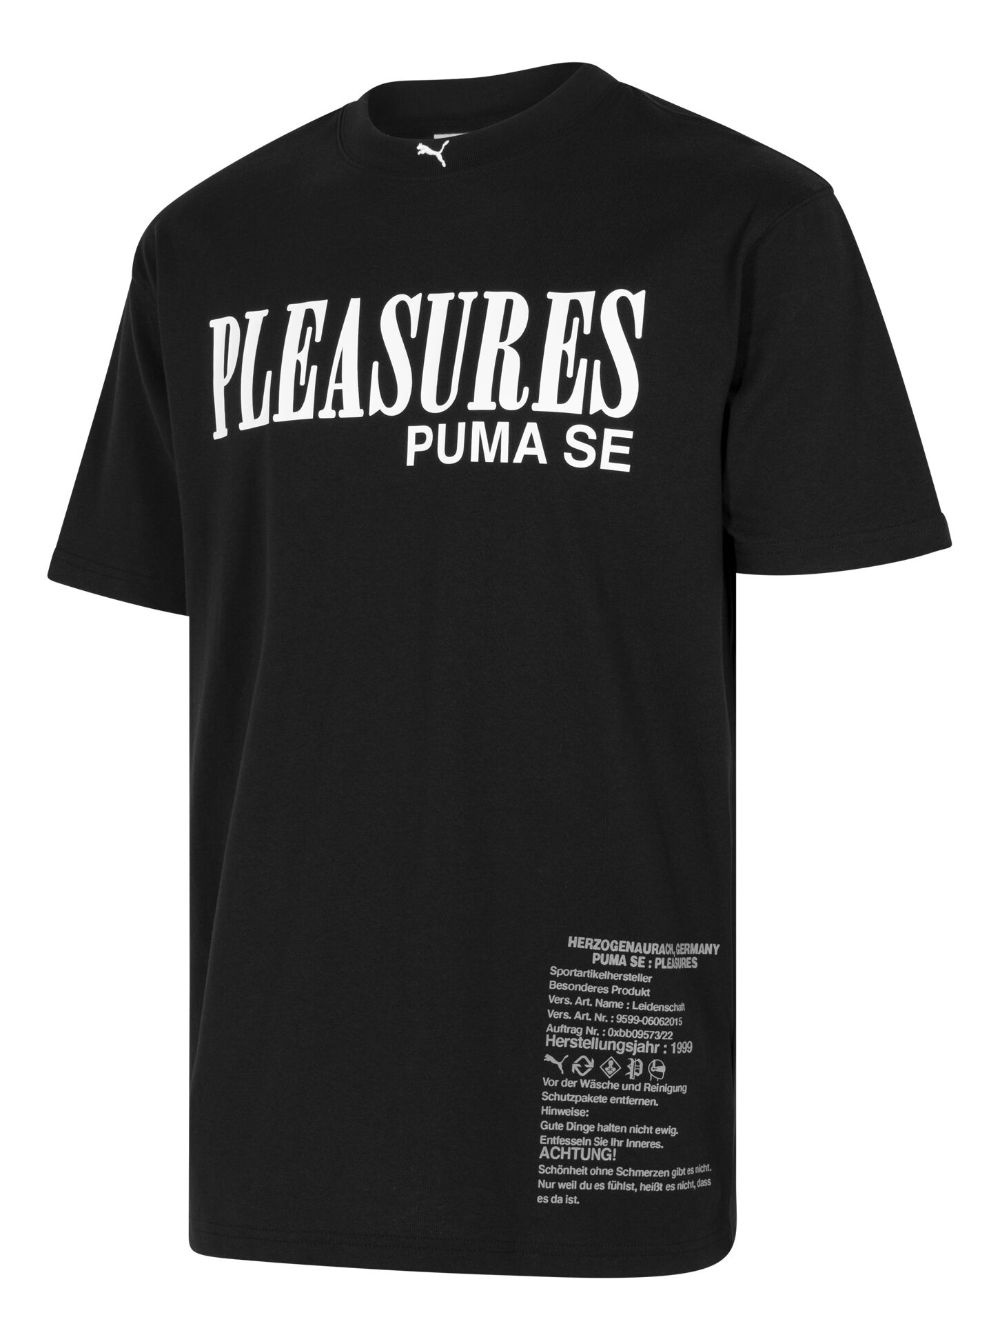 x Pleasures Typo cotton T-shirt - 3